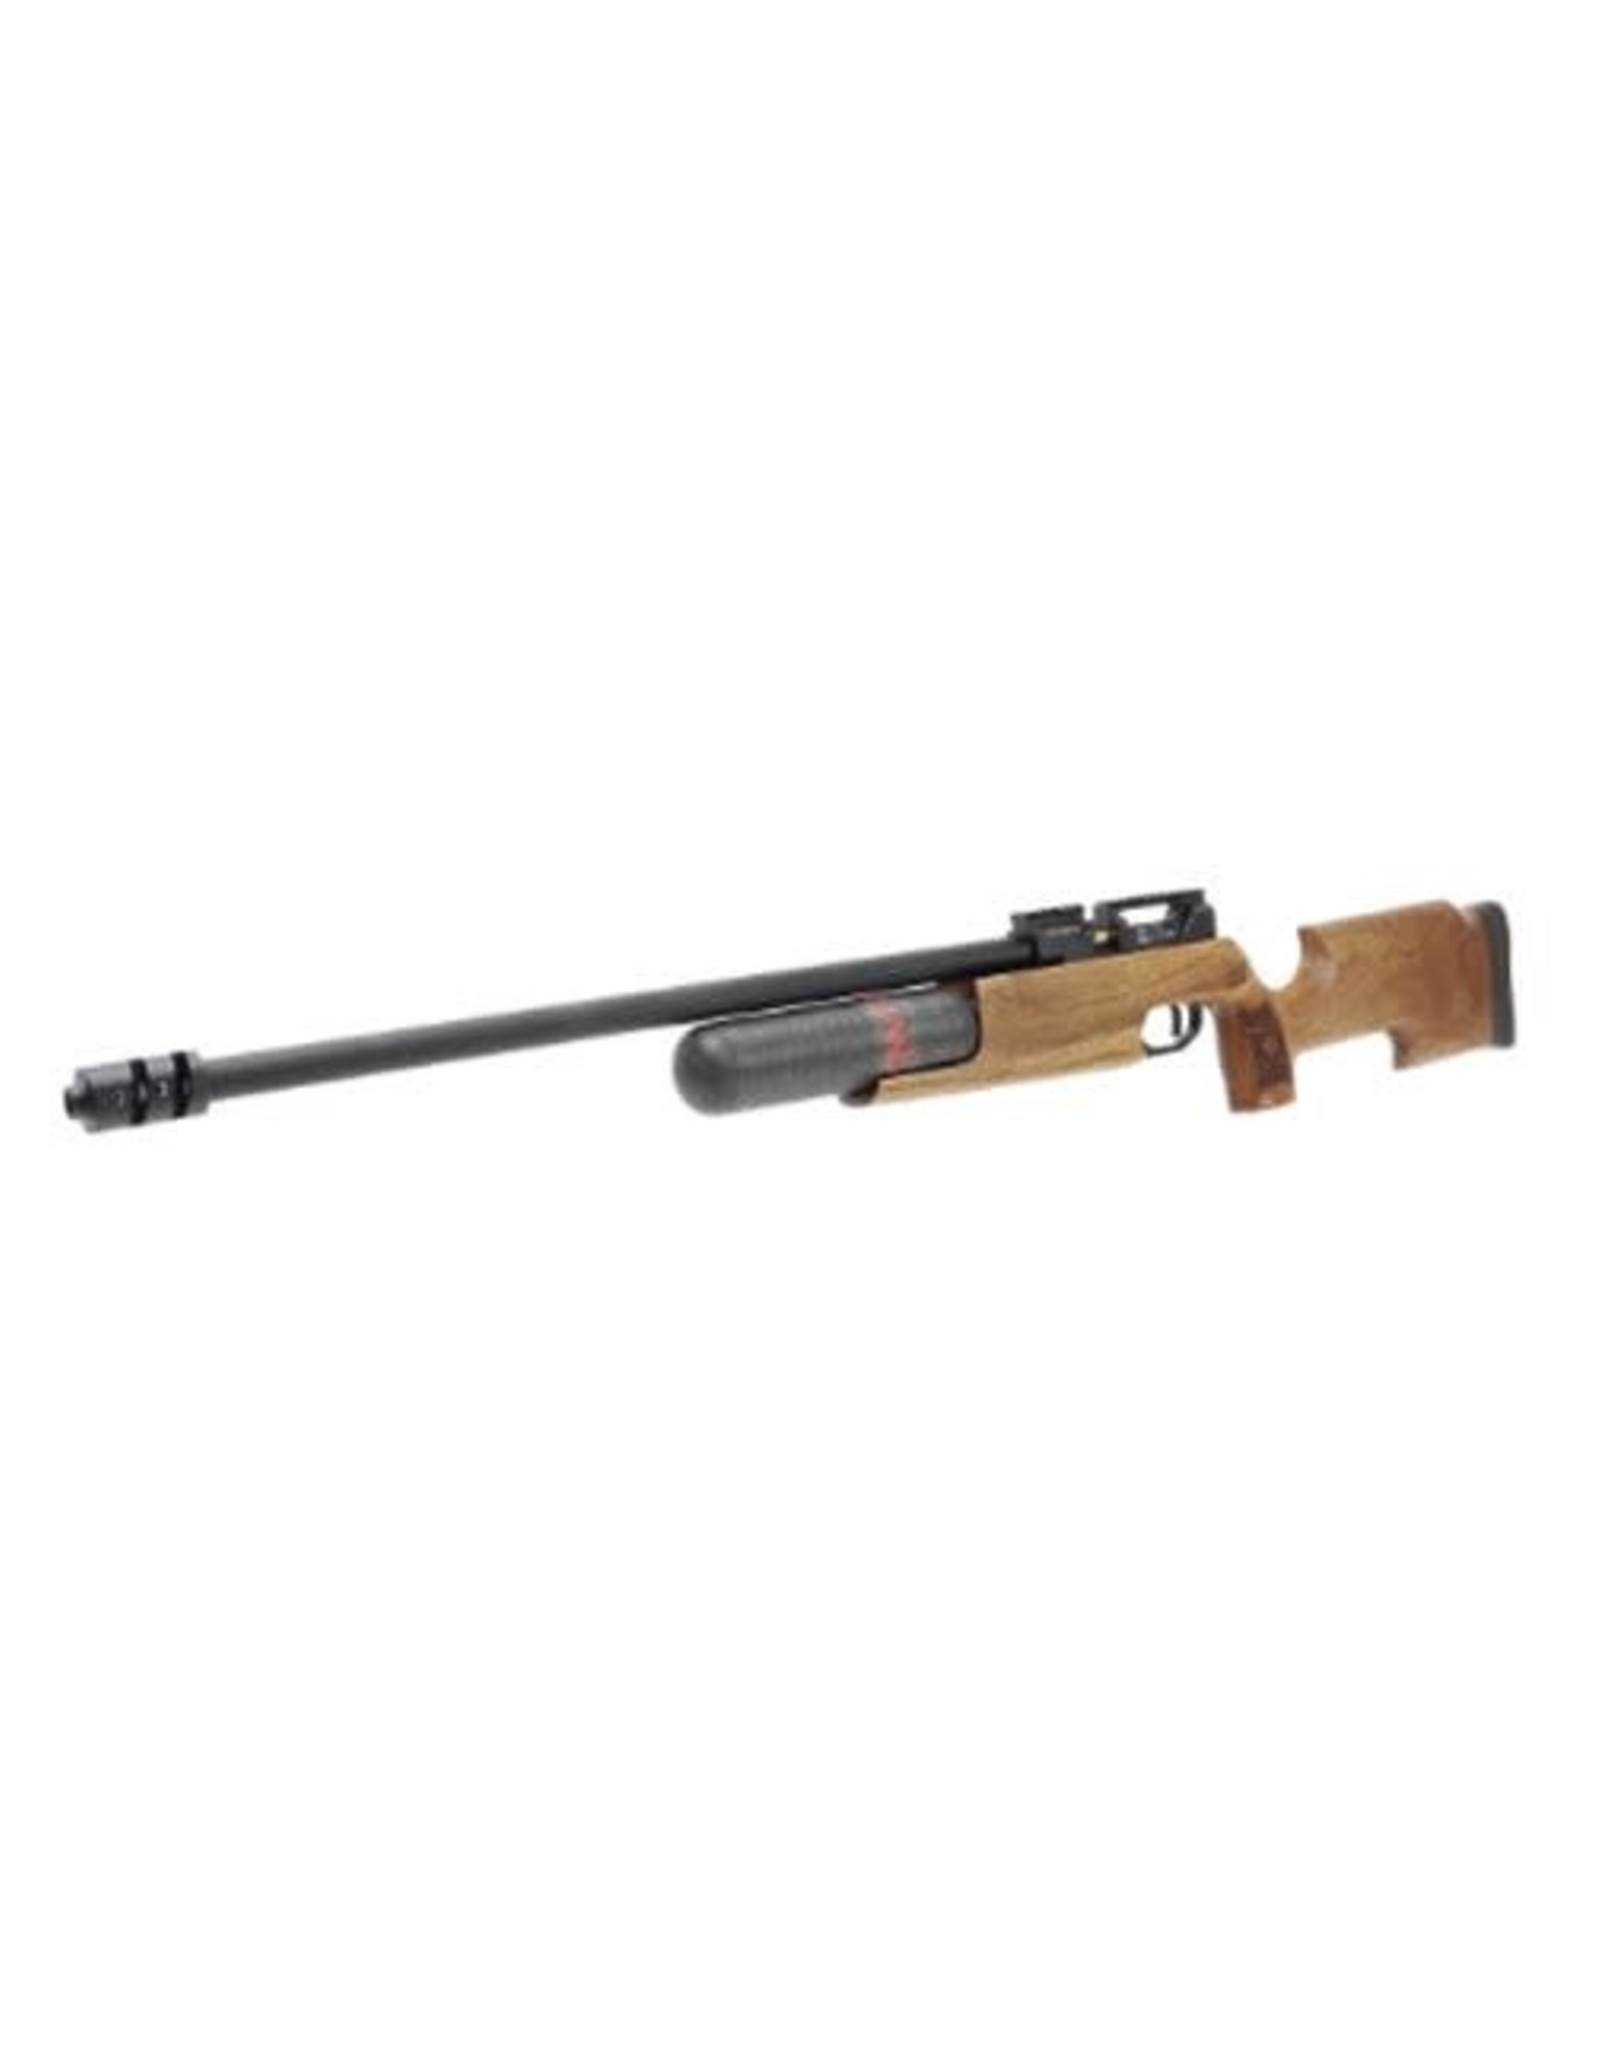 Evanix .50 (12.7mm) Cal. Evanix Ibex-X2 PCP Air Rifle with Walnut Stock